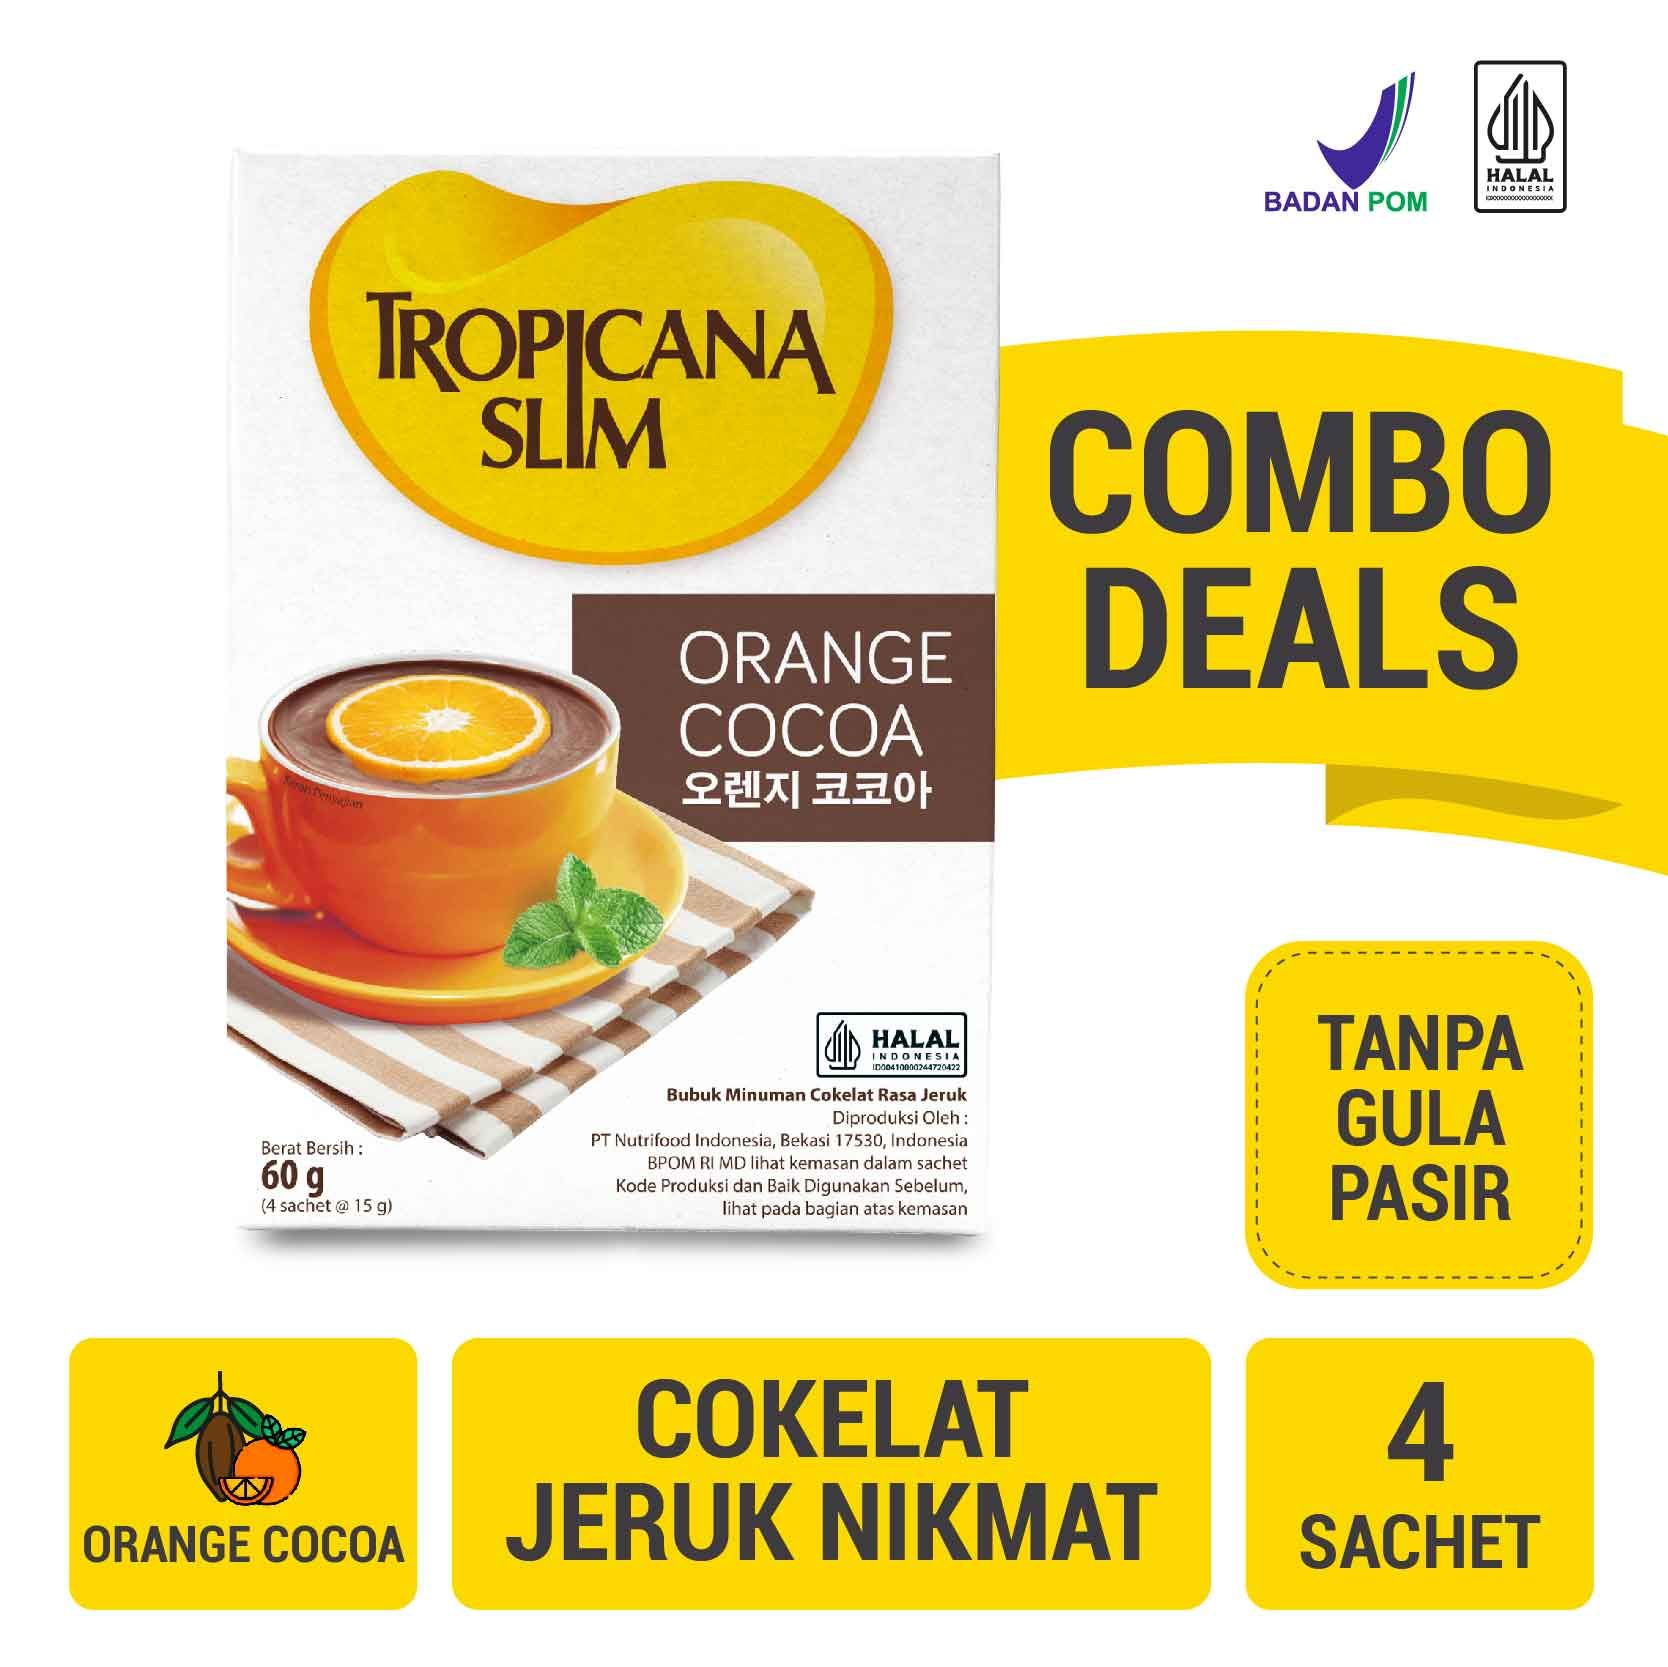 Twin Pack - Tropicana Slim Orange Cocoa 4 Sachet - Minuman Cokelat Jeruk Nikmat Tanpa Gula Pasir | 2T00803164P2 - 1